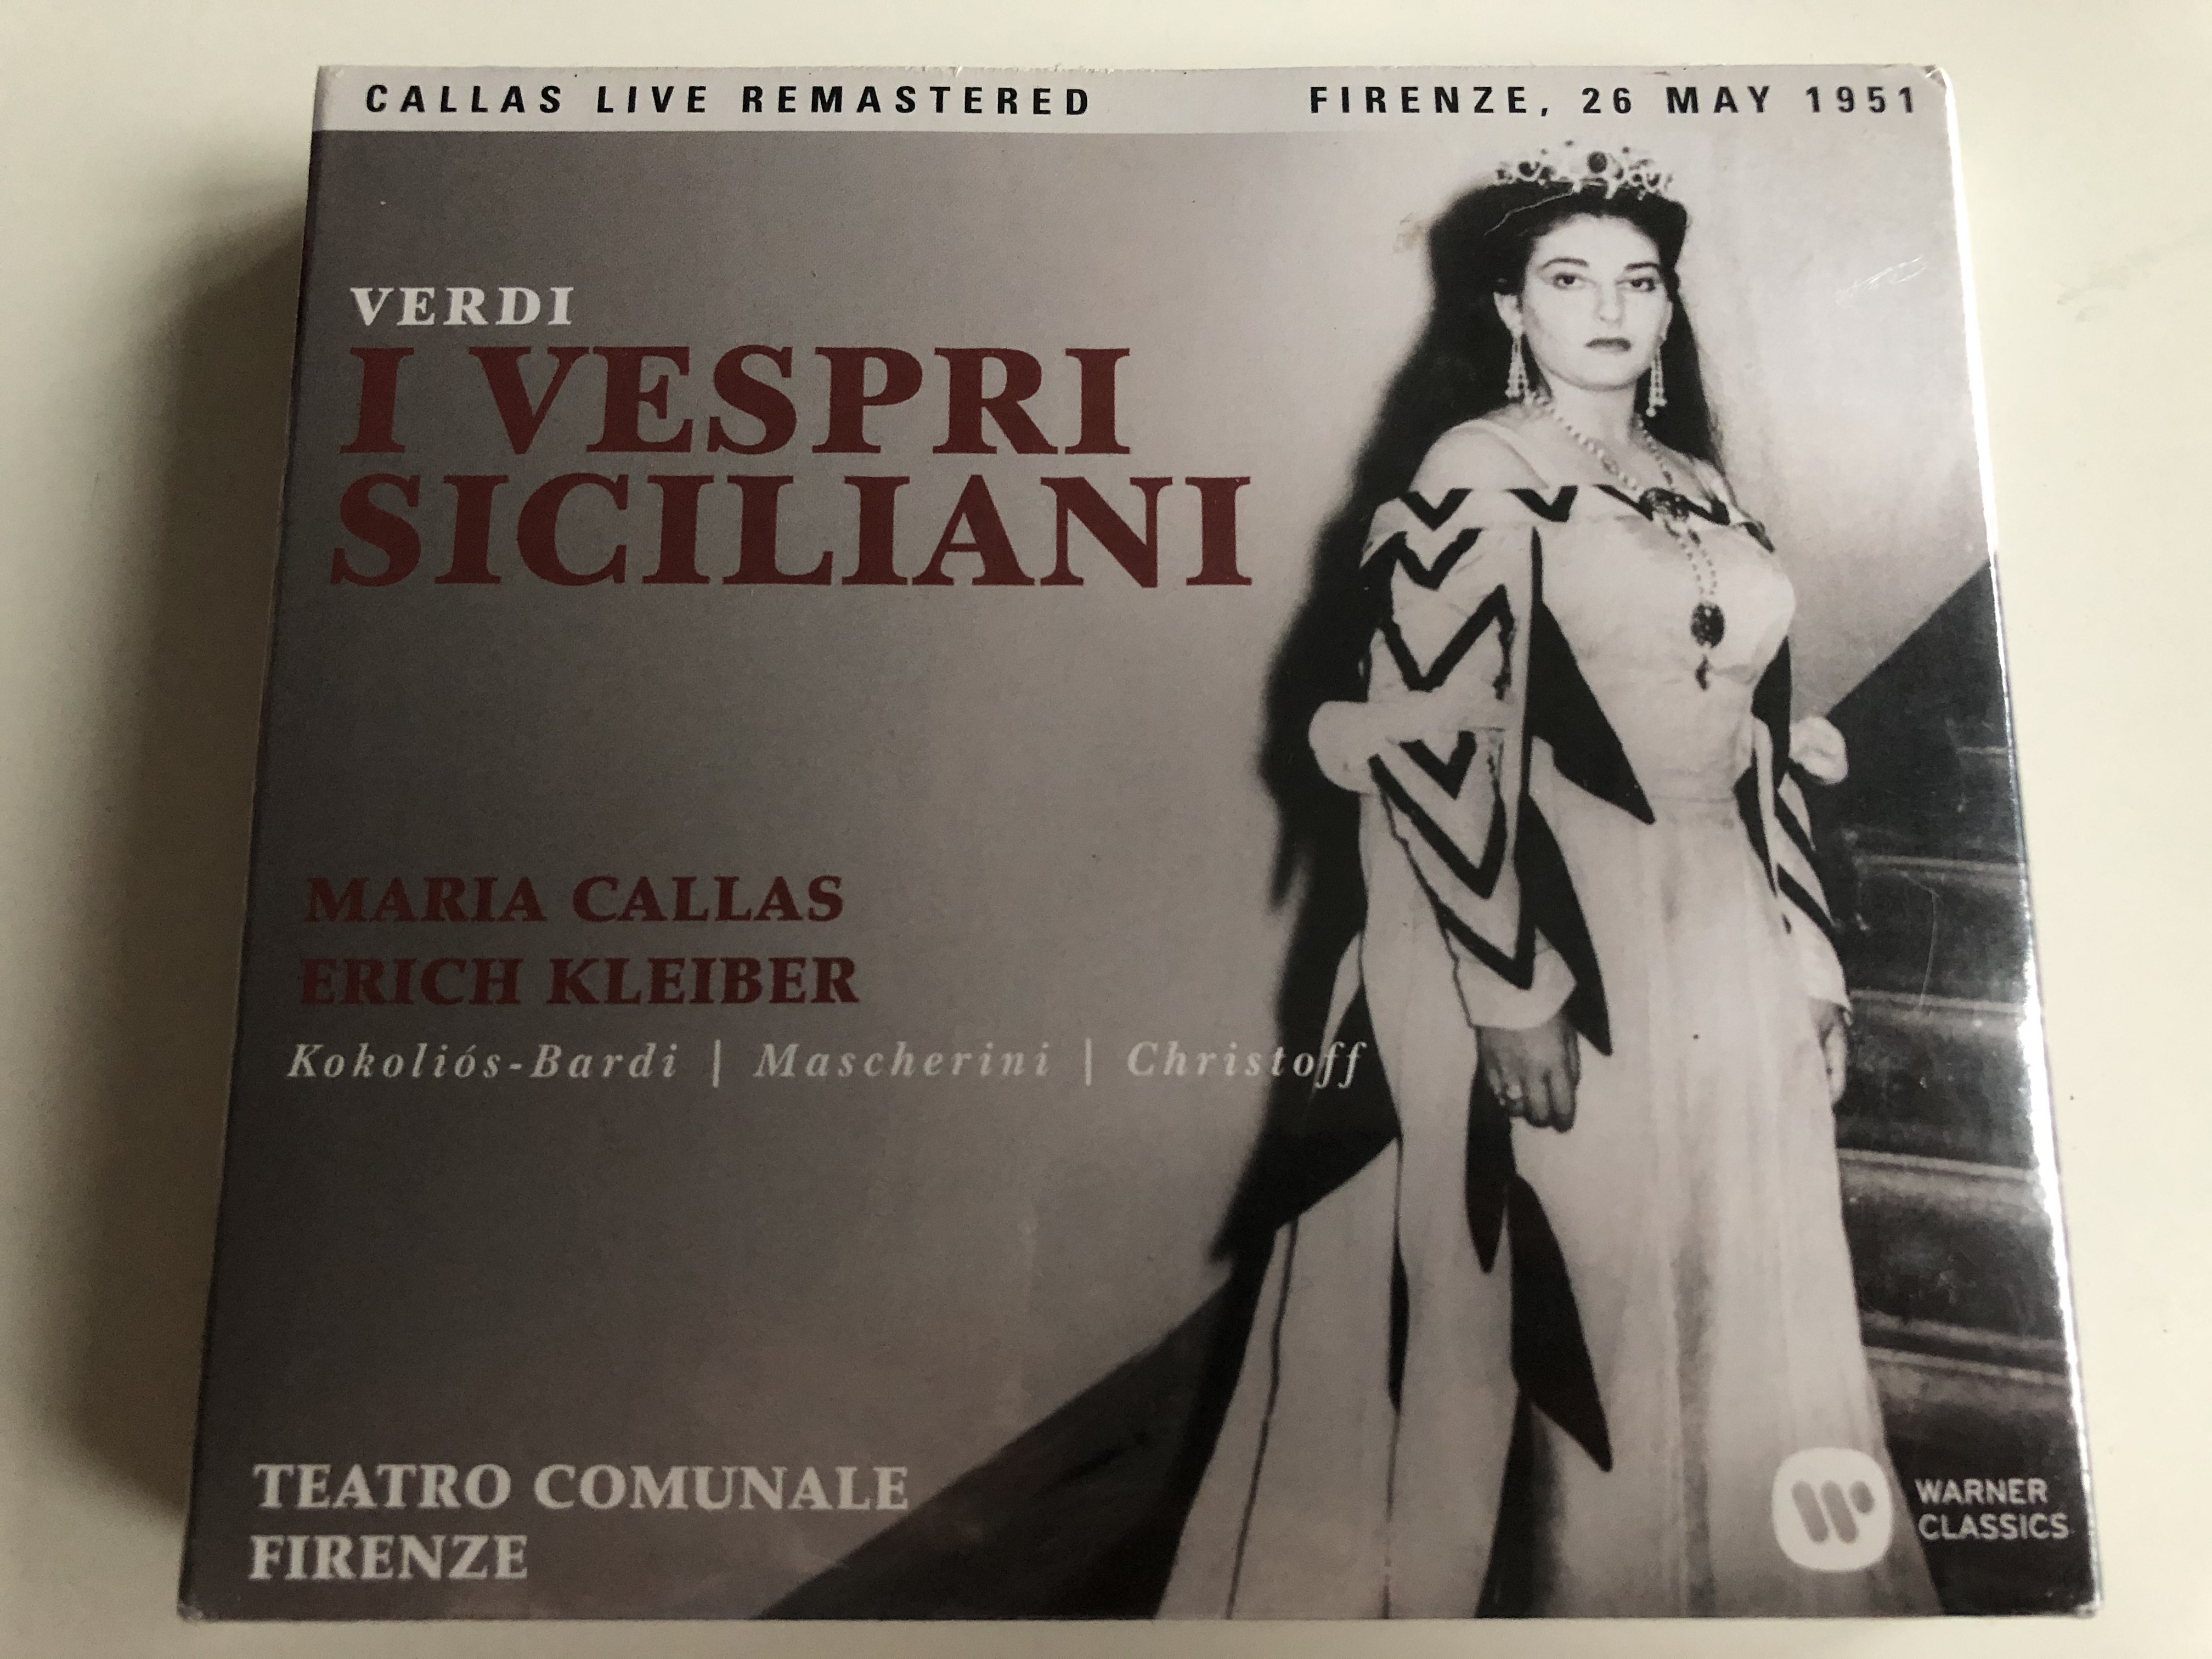 verdi-i-vespri-siciliani-maria-callas-erich-kleiber-kokolios-bardi-mascherini-christoff-teatro-comunale-firenze-callas-live-remastered-firenze-26-may-1951-warner-classics-3x-audi-1-.jpg